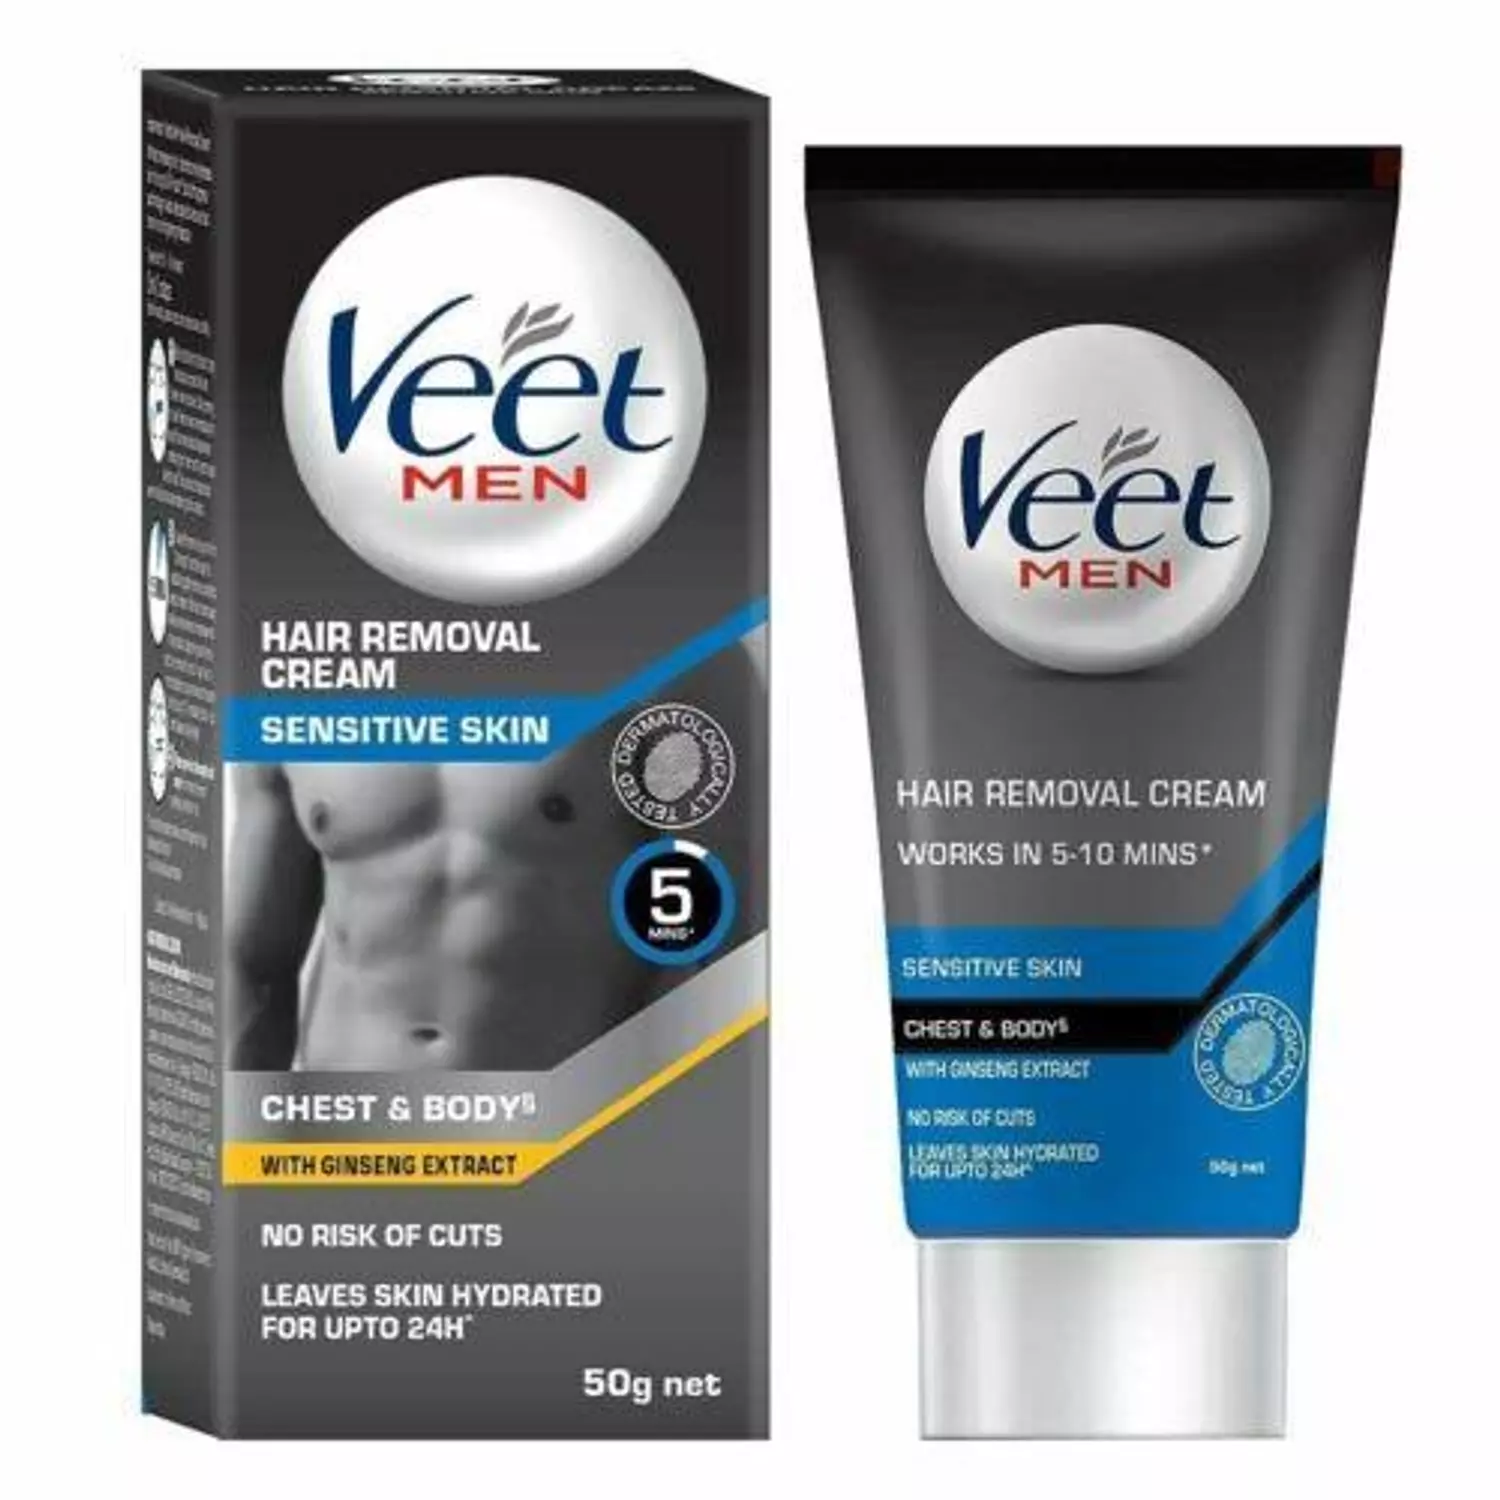 Veet Men Hair Removal Cream hover image